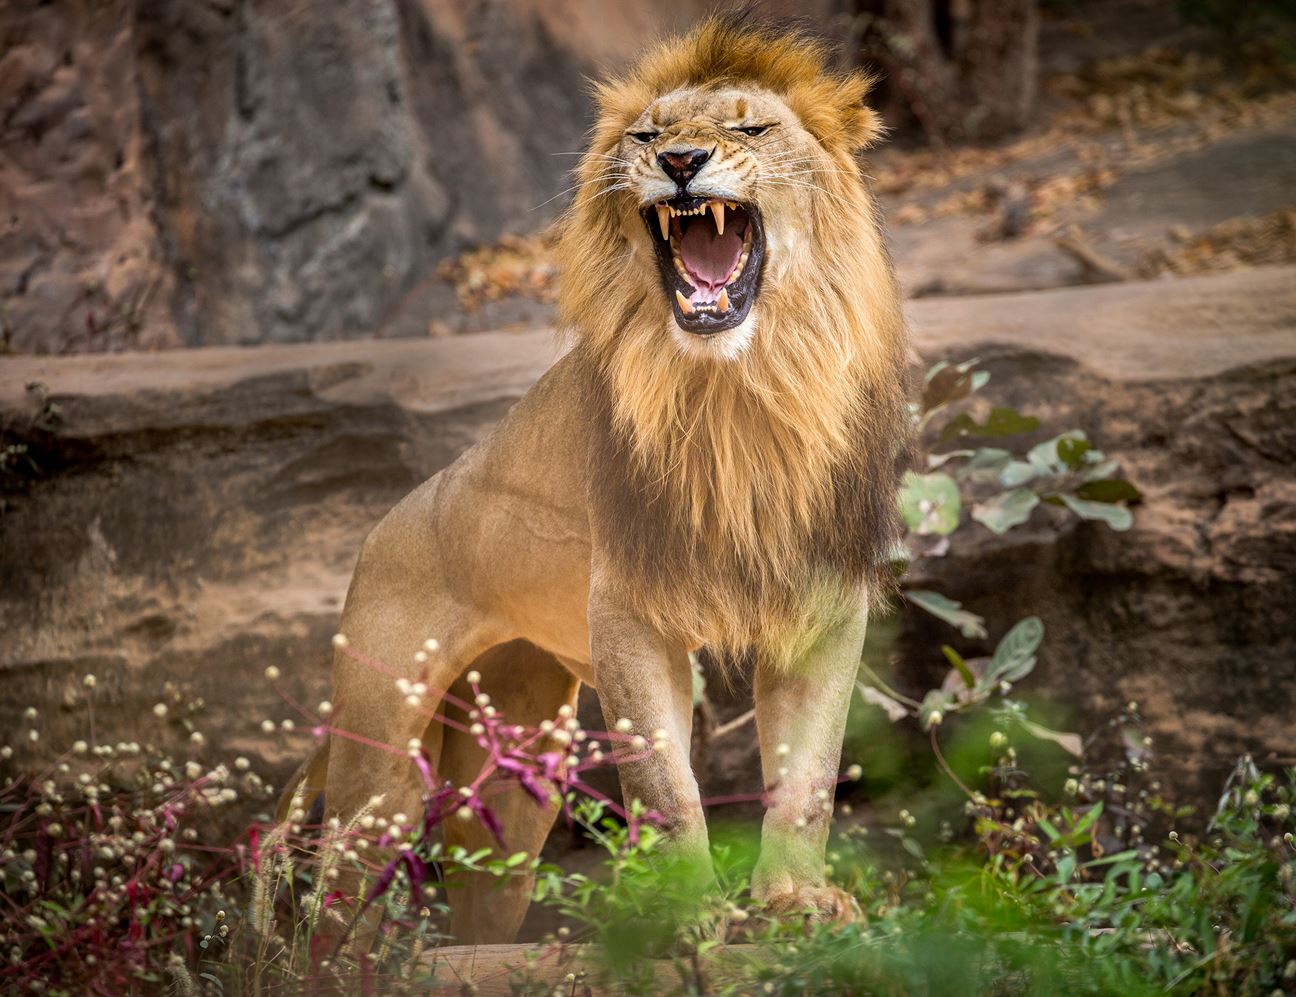 A male lion captured mid-roar